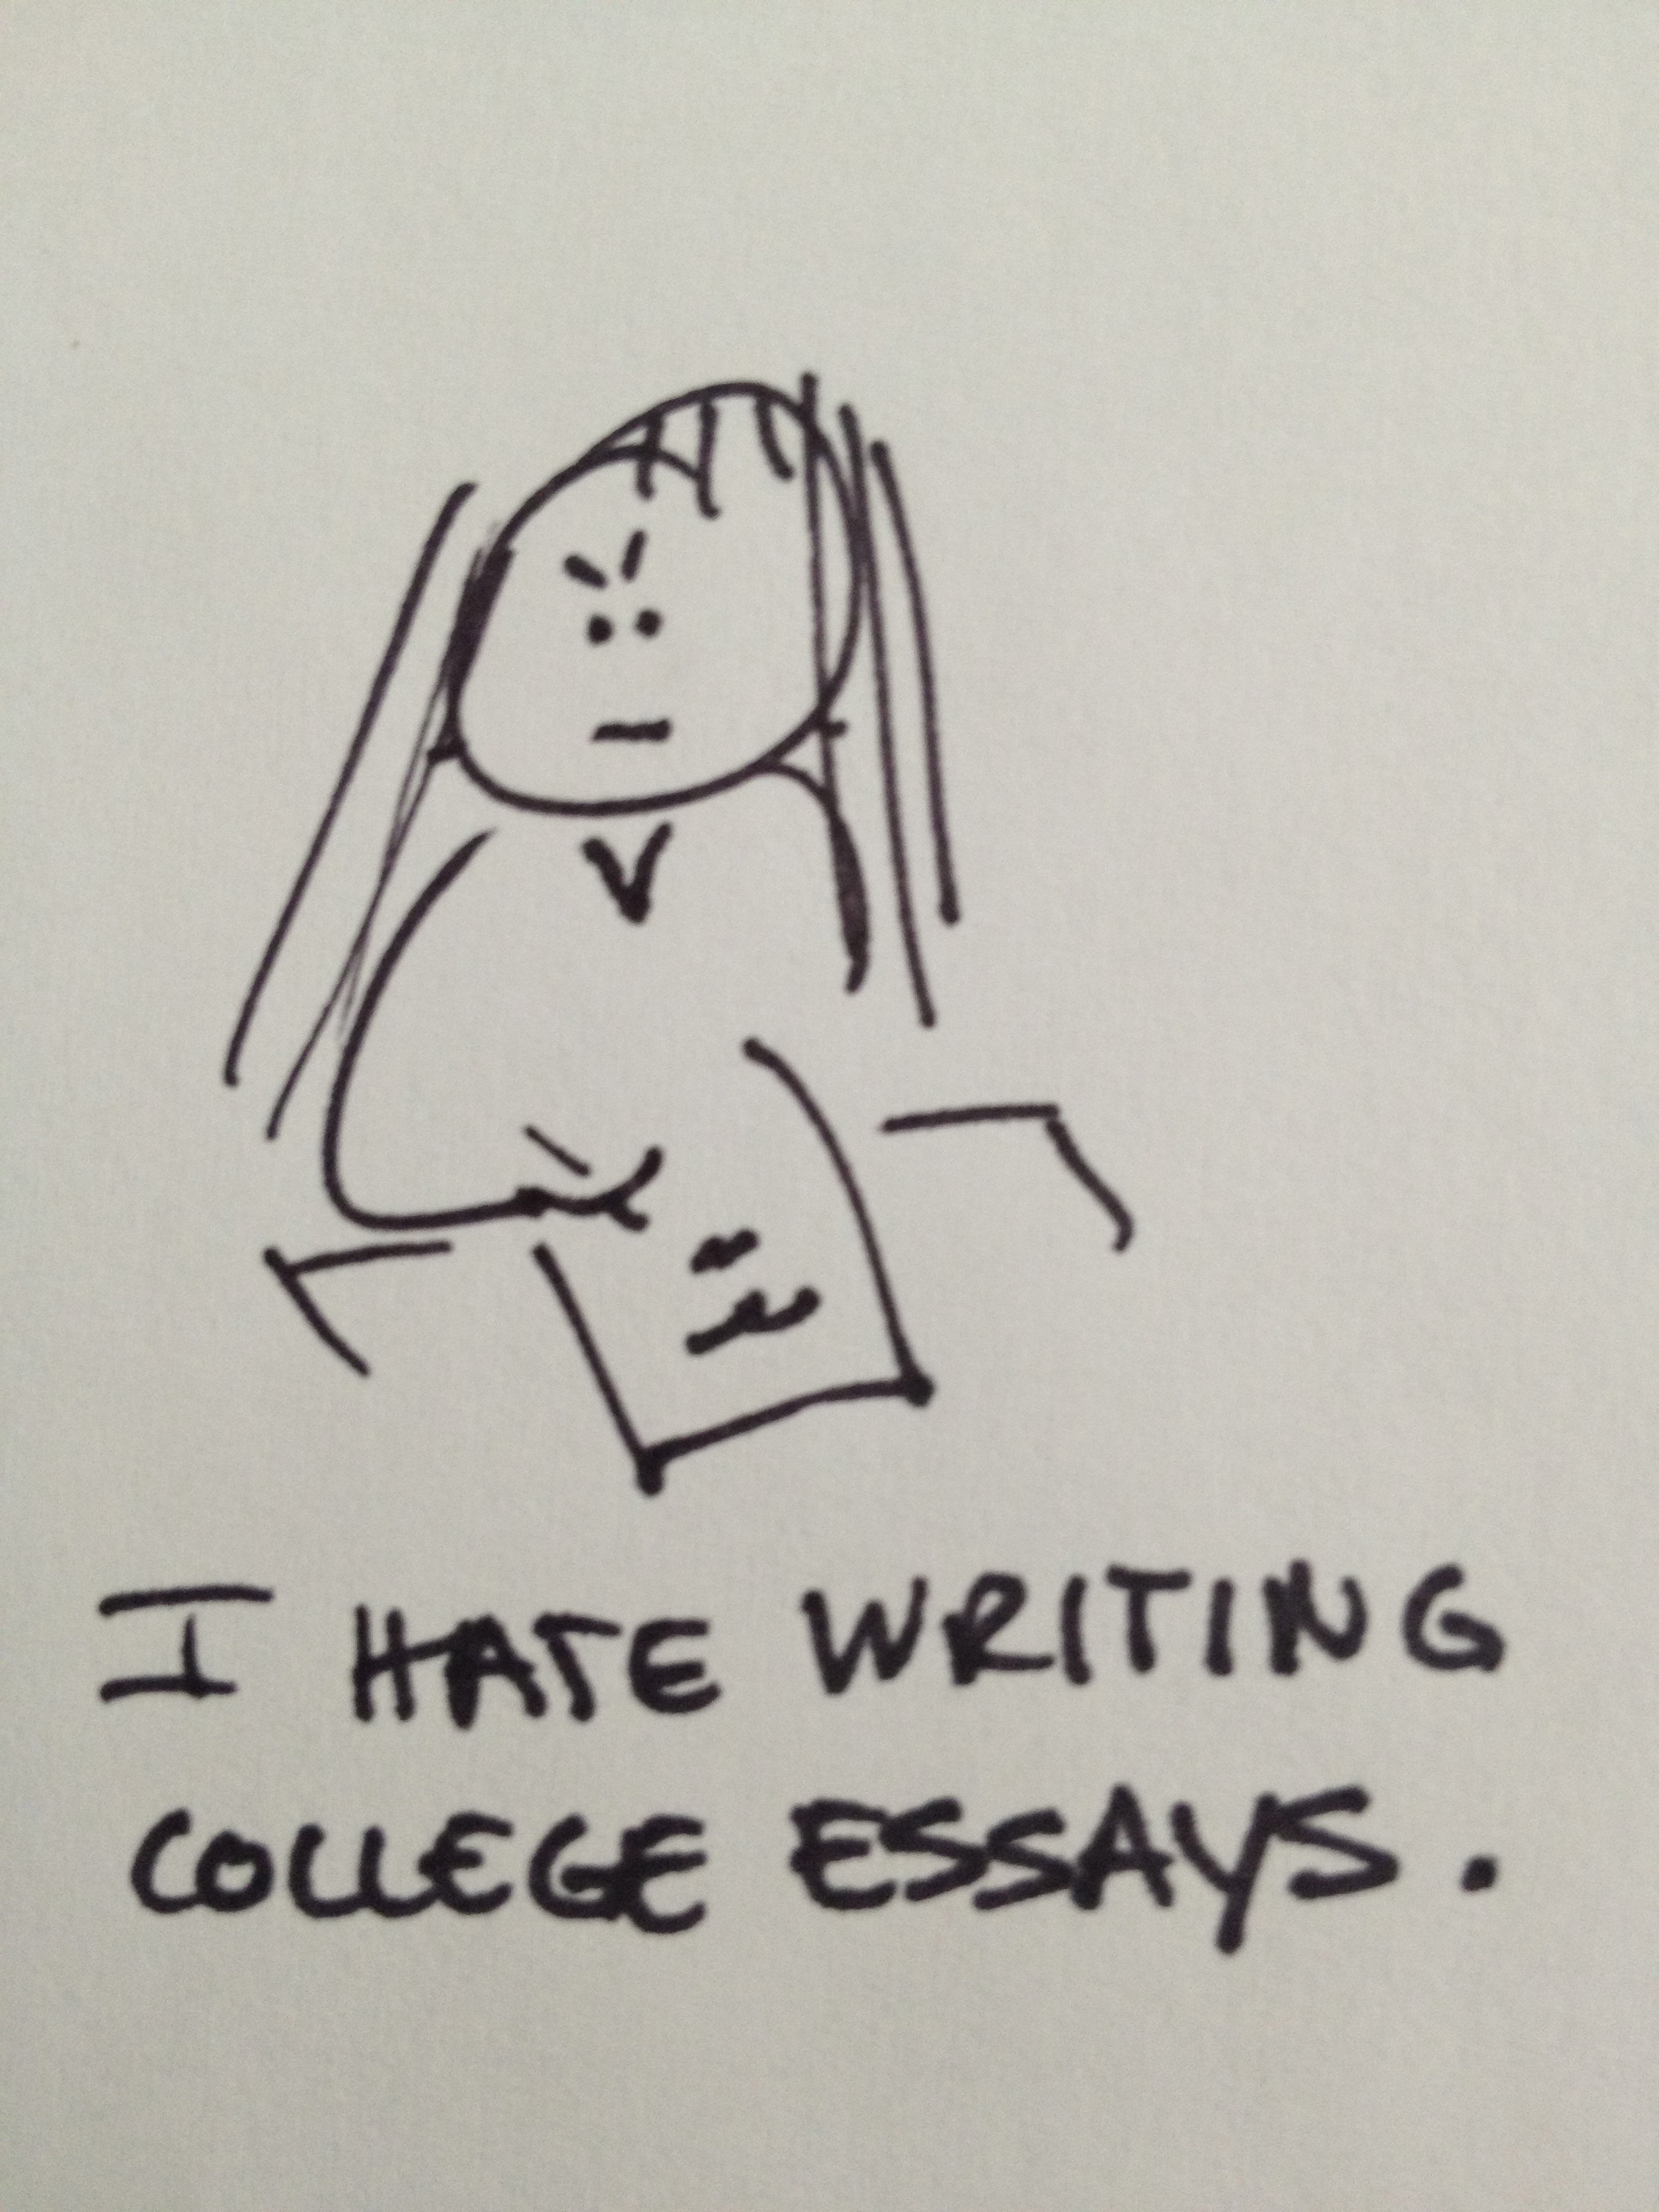 Best college admission essays 2013